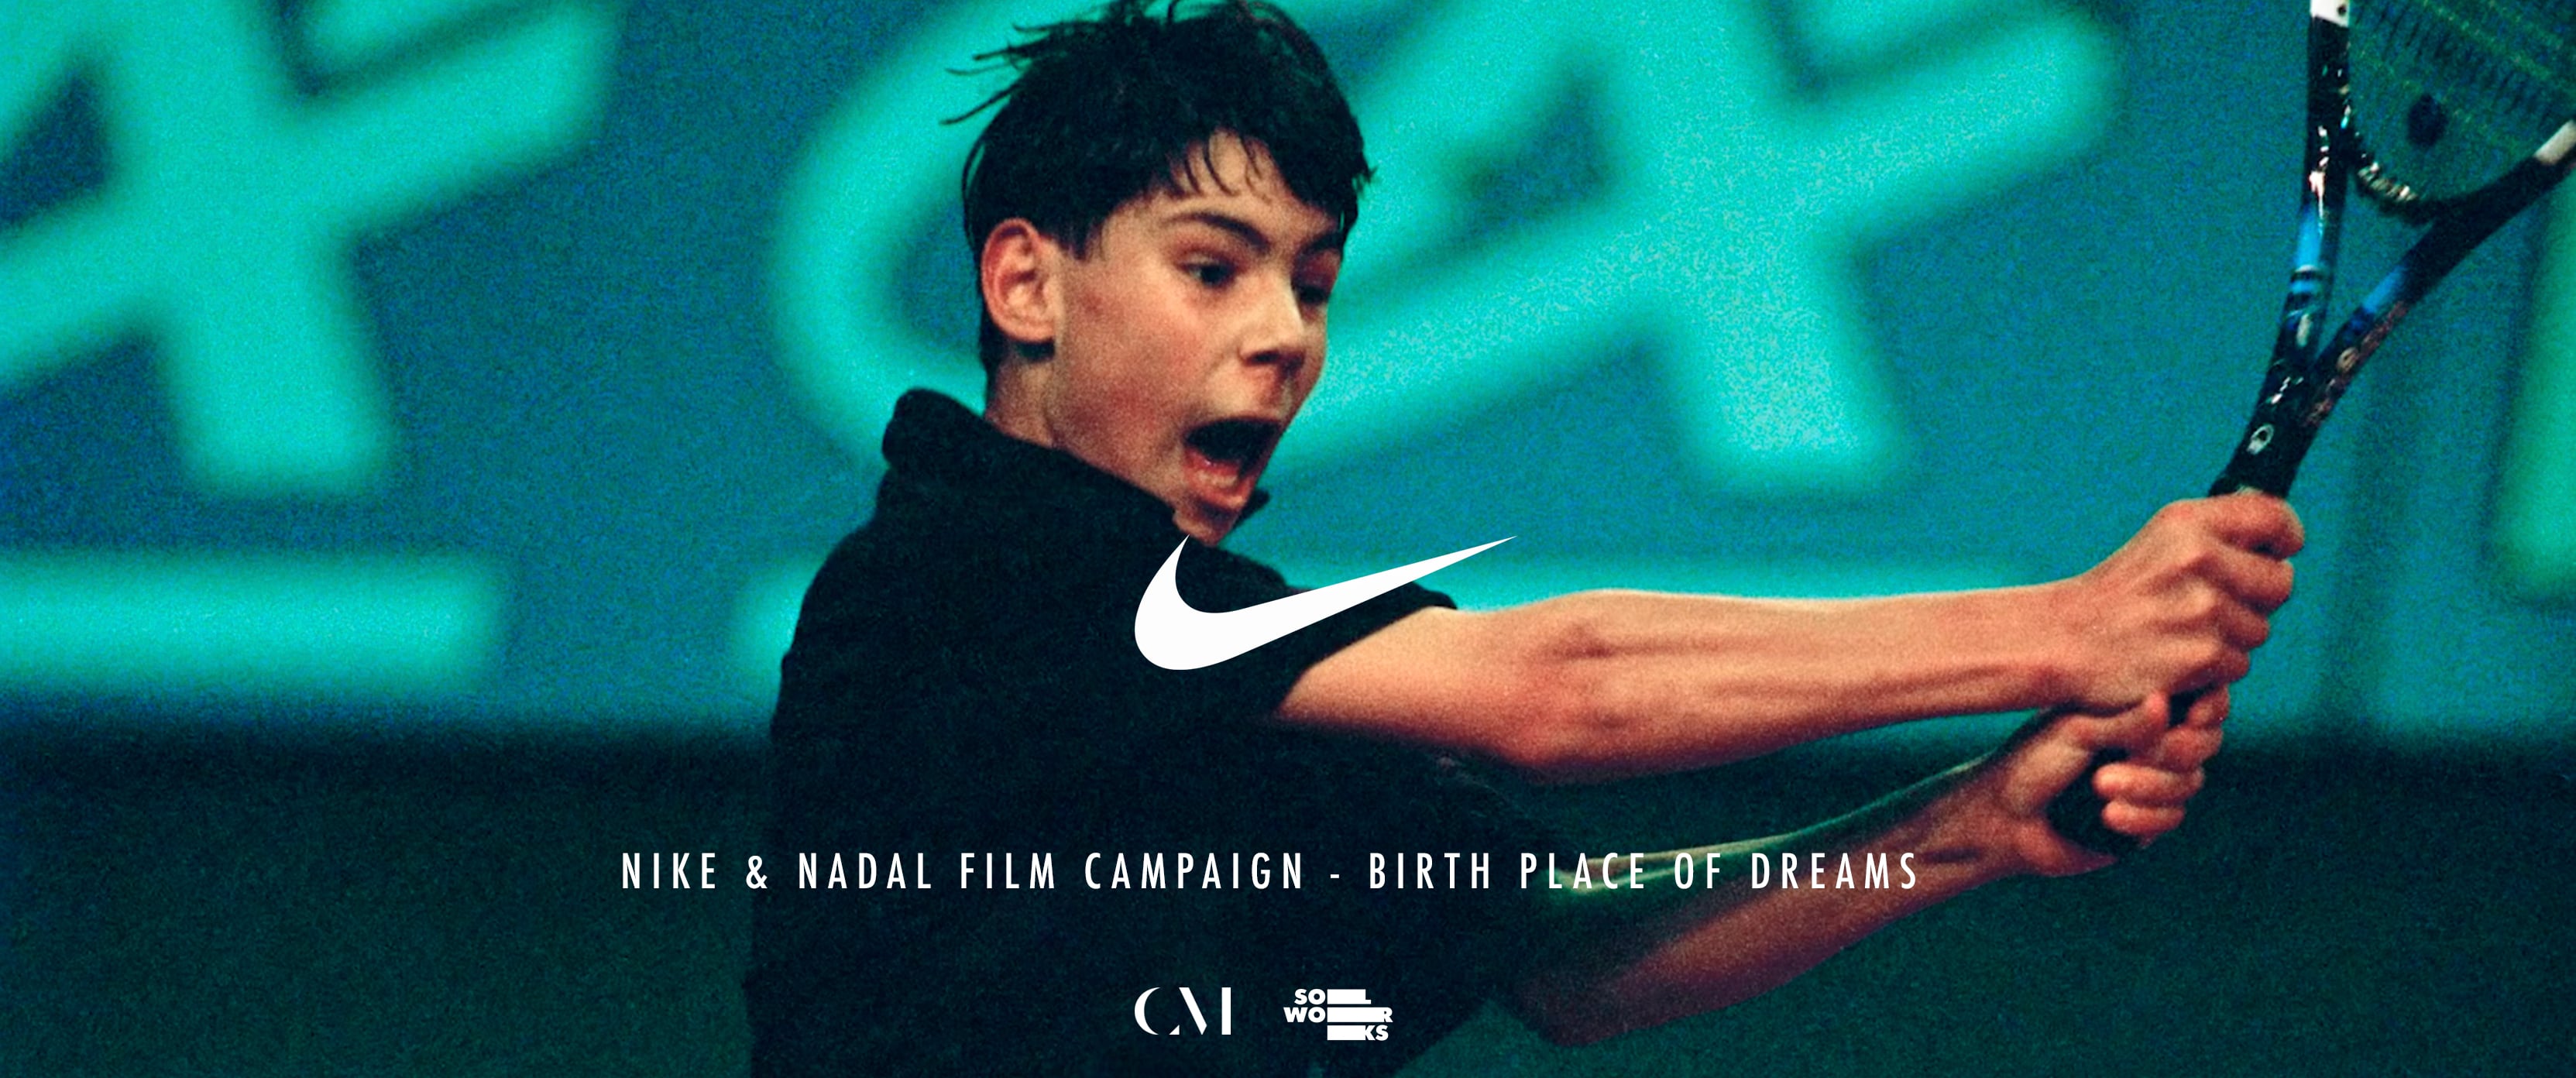 Nike - Birthplace of Dreams - Rafael Nadal